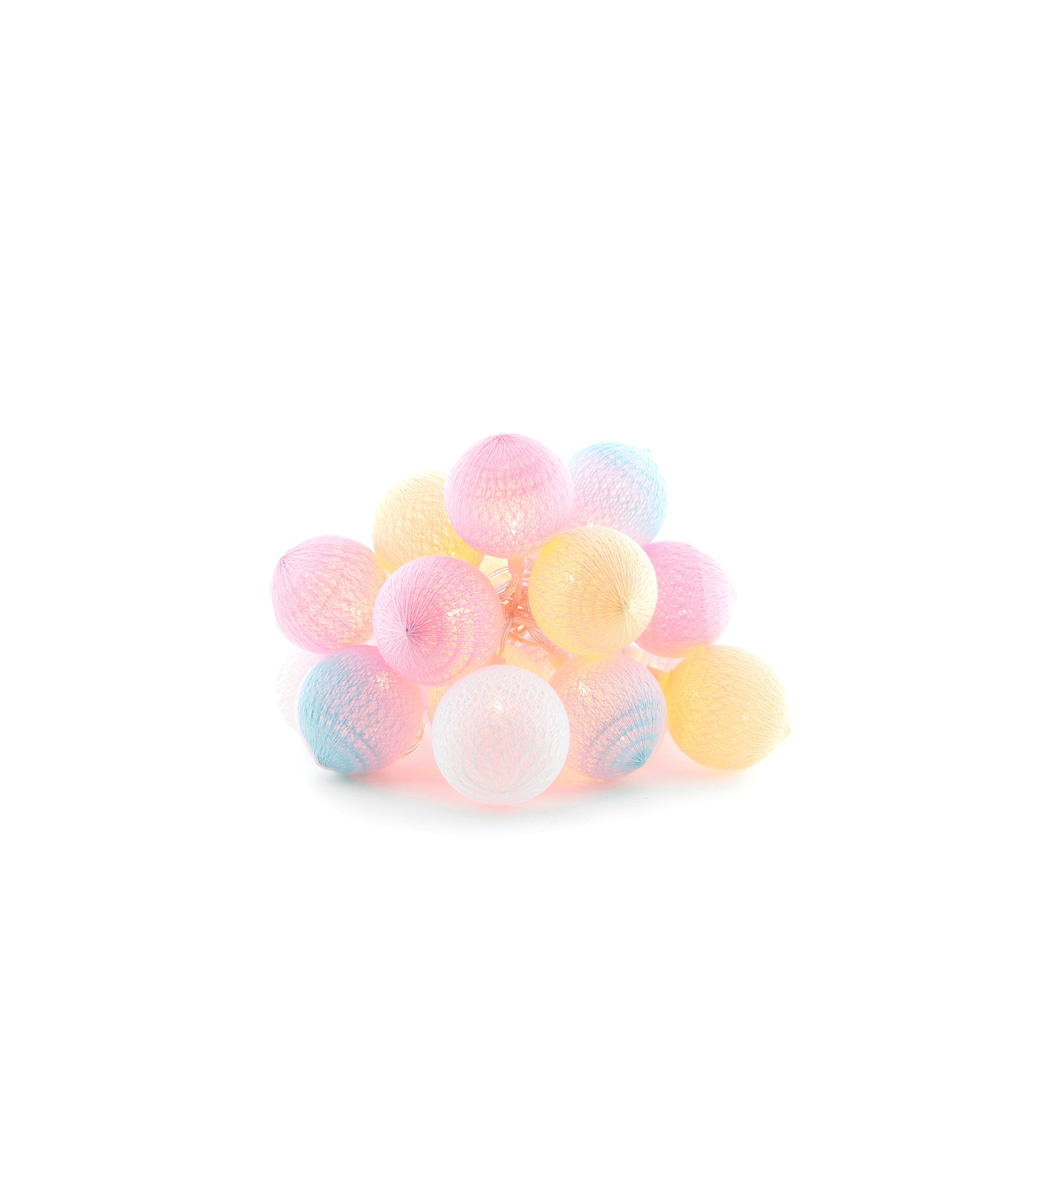 Lichterkette Outdoor Starter Set „Pastell“ 20 Balls